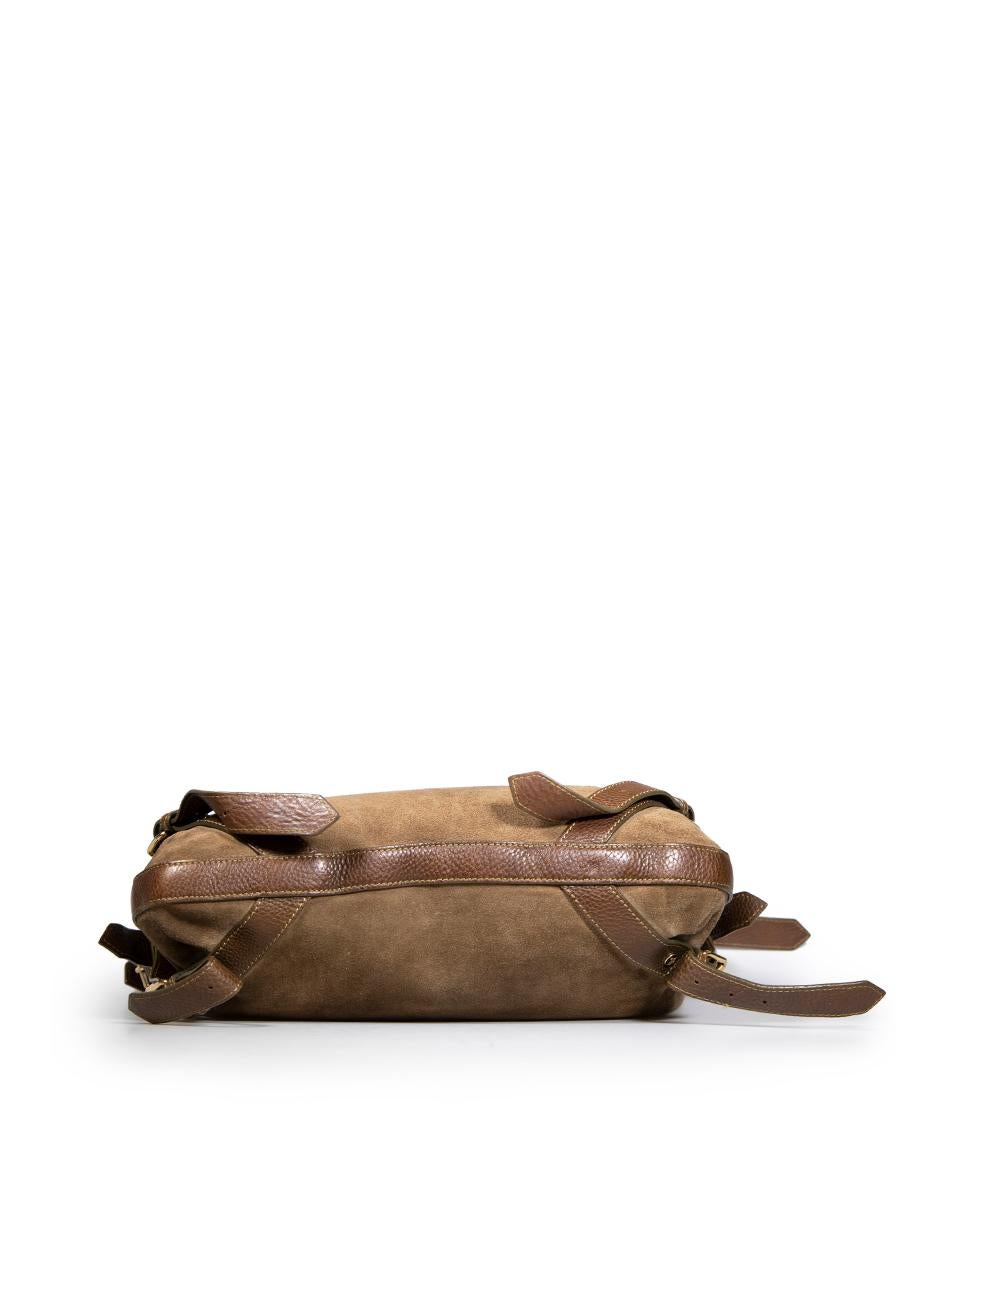 Women's Burberry Khaki Suede Hobo Shoulder Bag For Sale